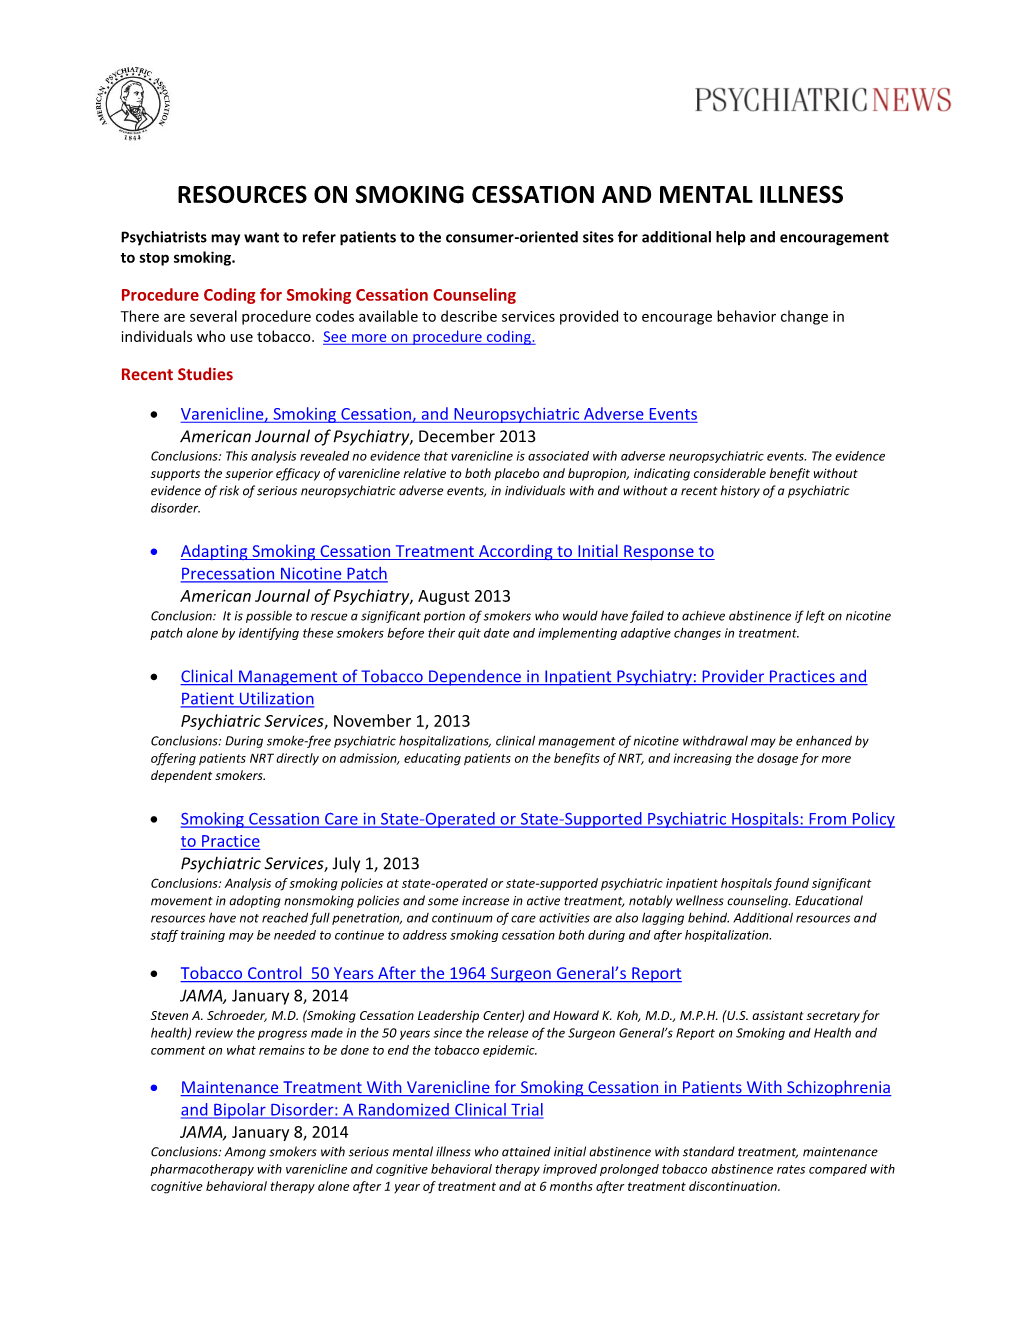 Resources on Smoking Cessation and Mental Illness